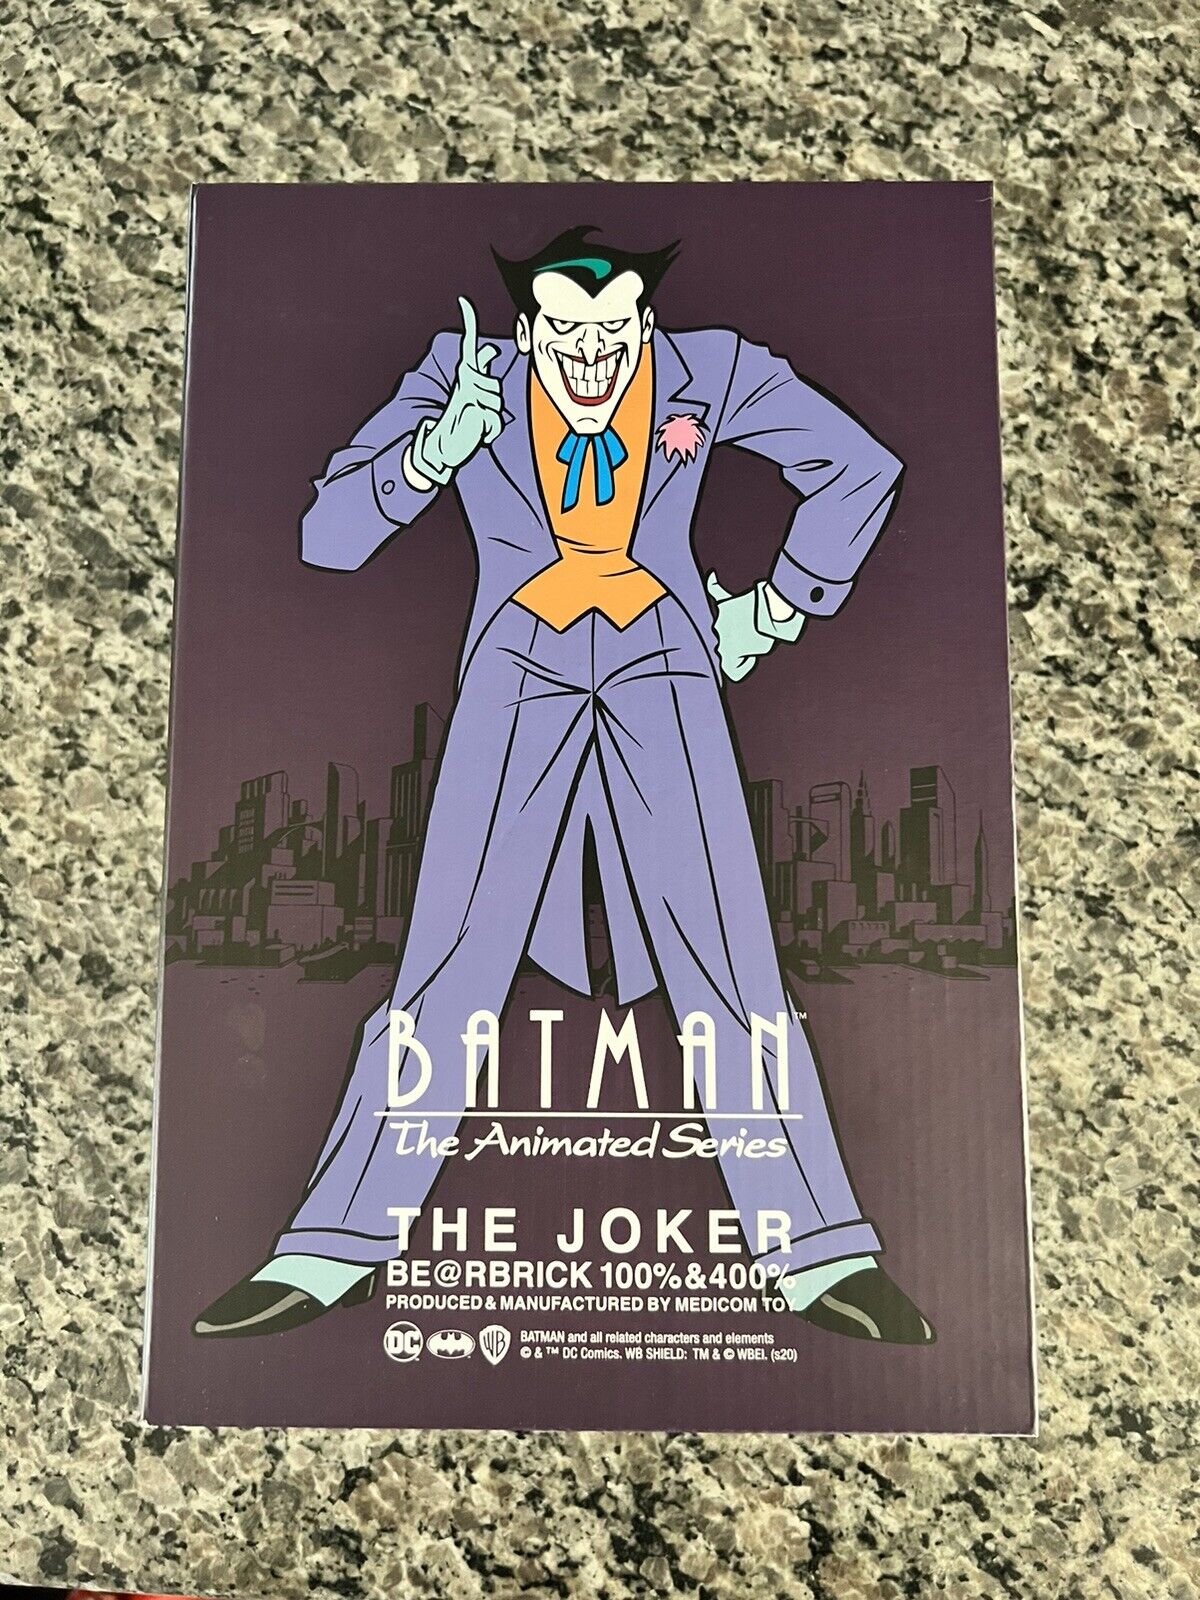 Batman The Animated Series, Joker Bear Brick 400% and 100% New Never Opened